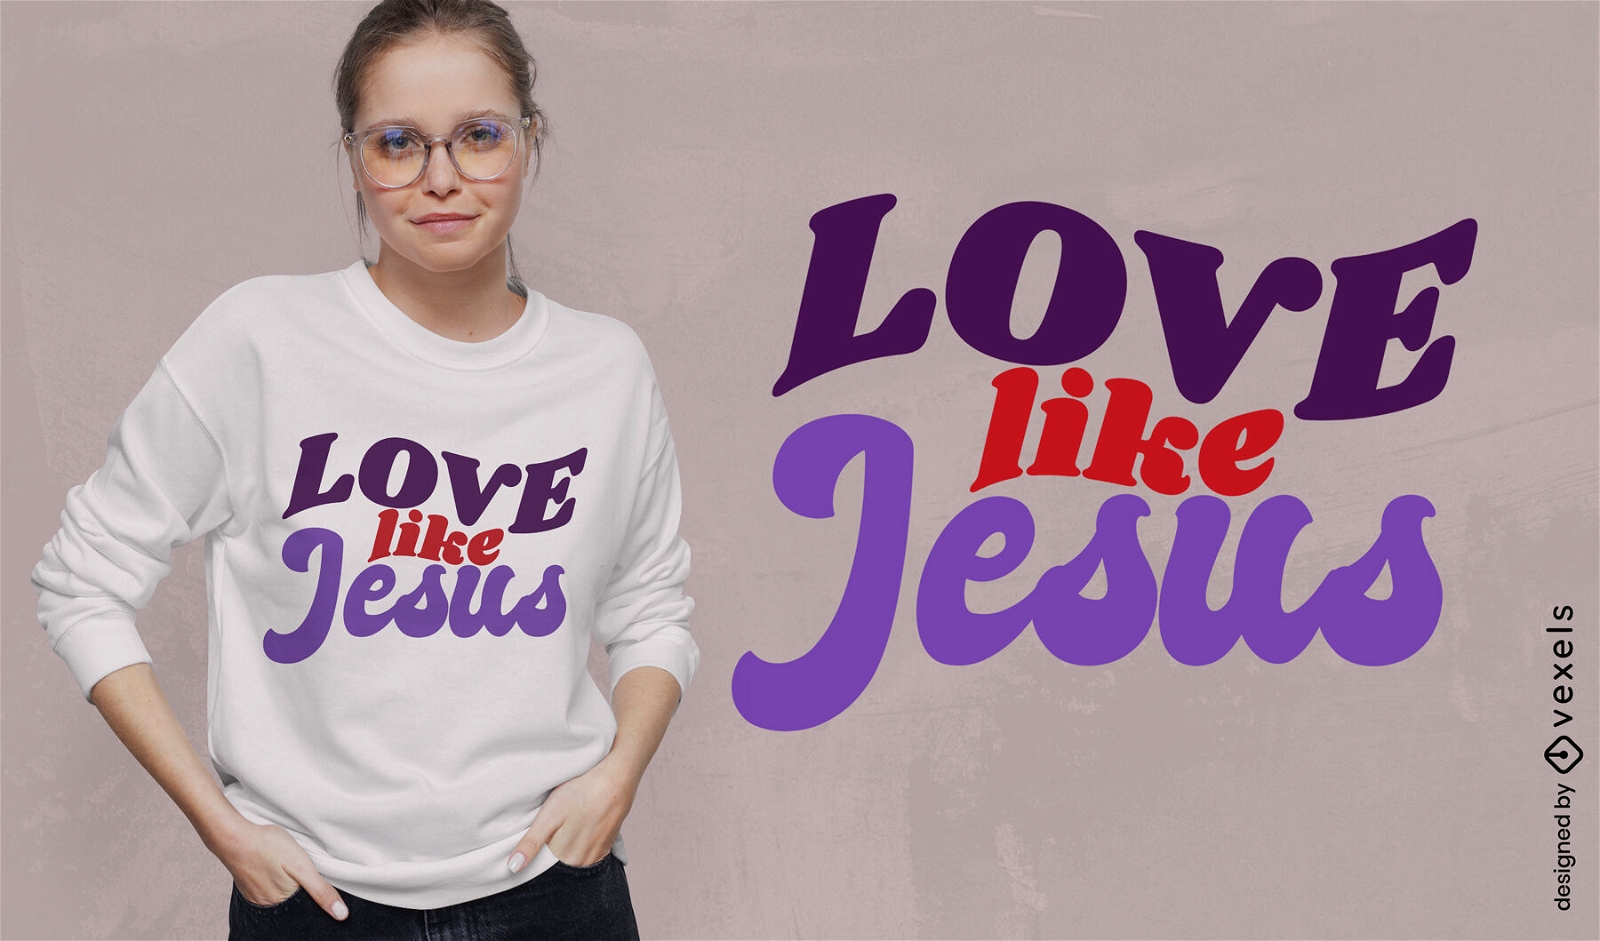 Love like jesus t-shirt design